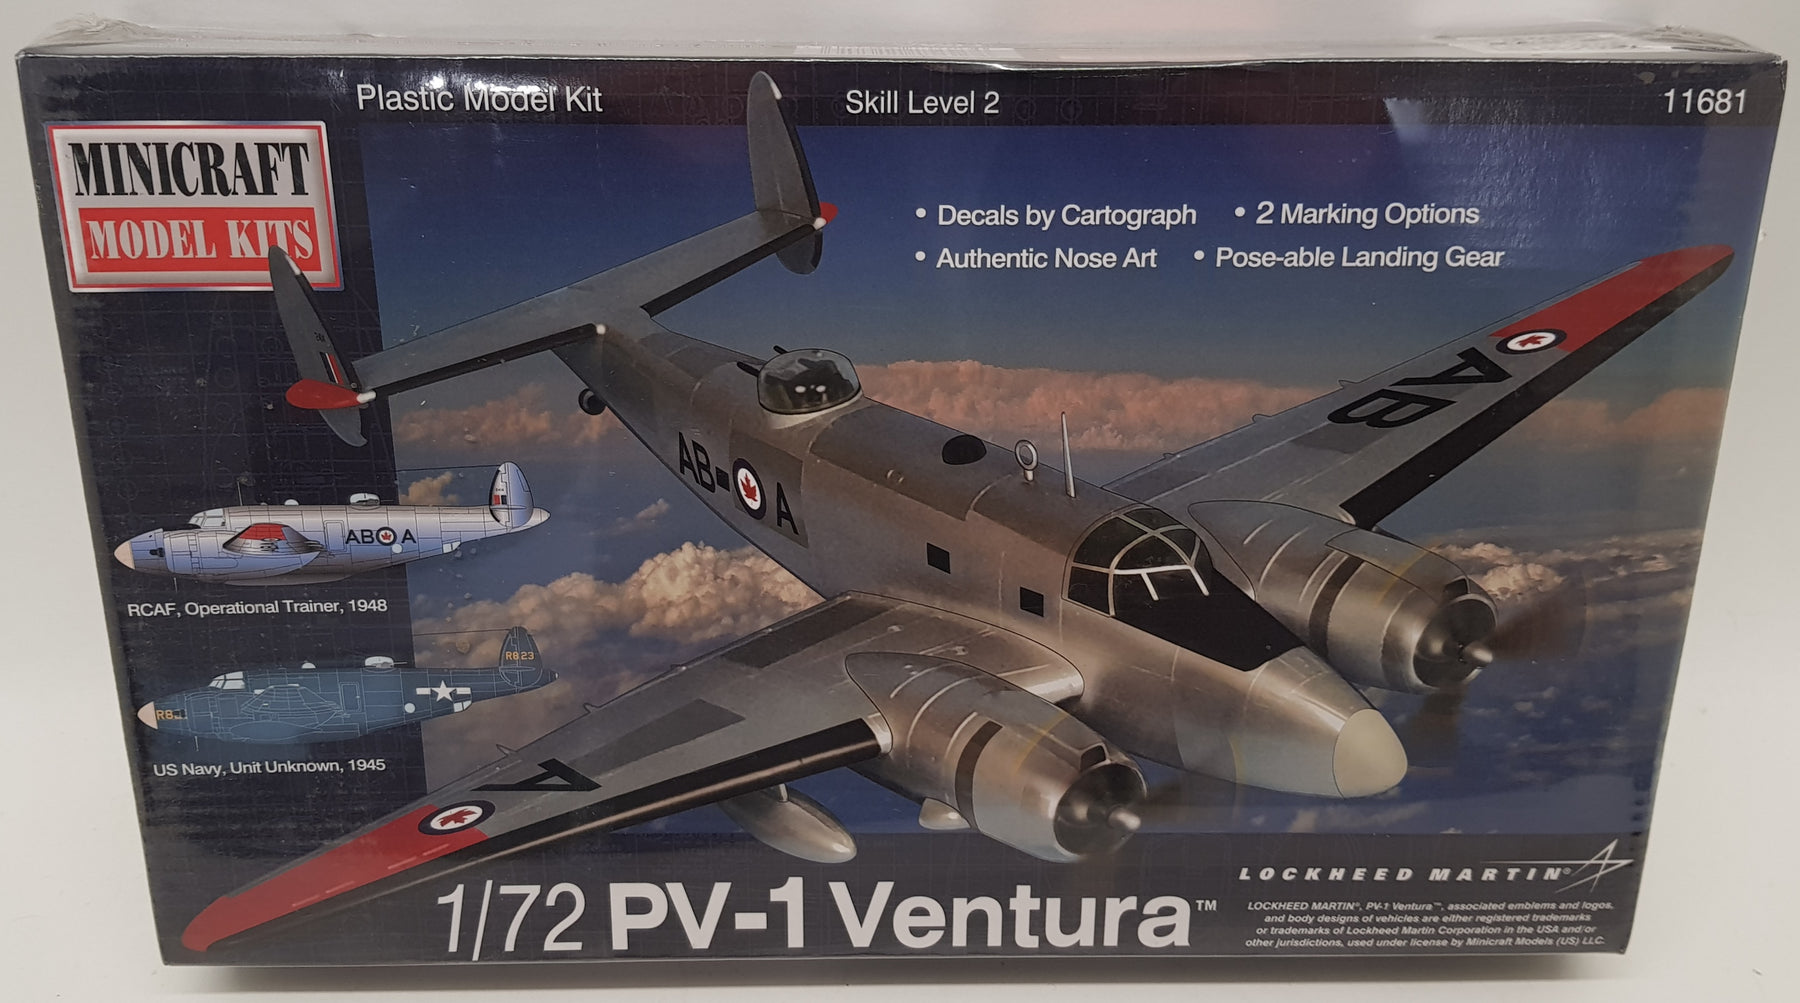 Minicraft Model Aircraft Kit 11681 - 1/72 Scale PV-1 Ventura